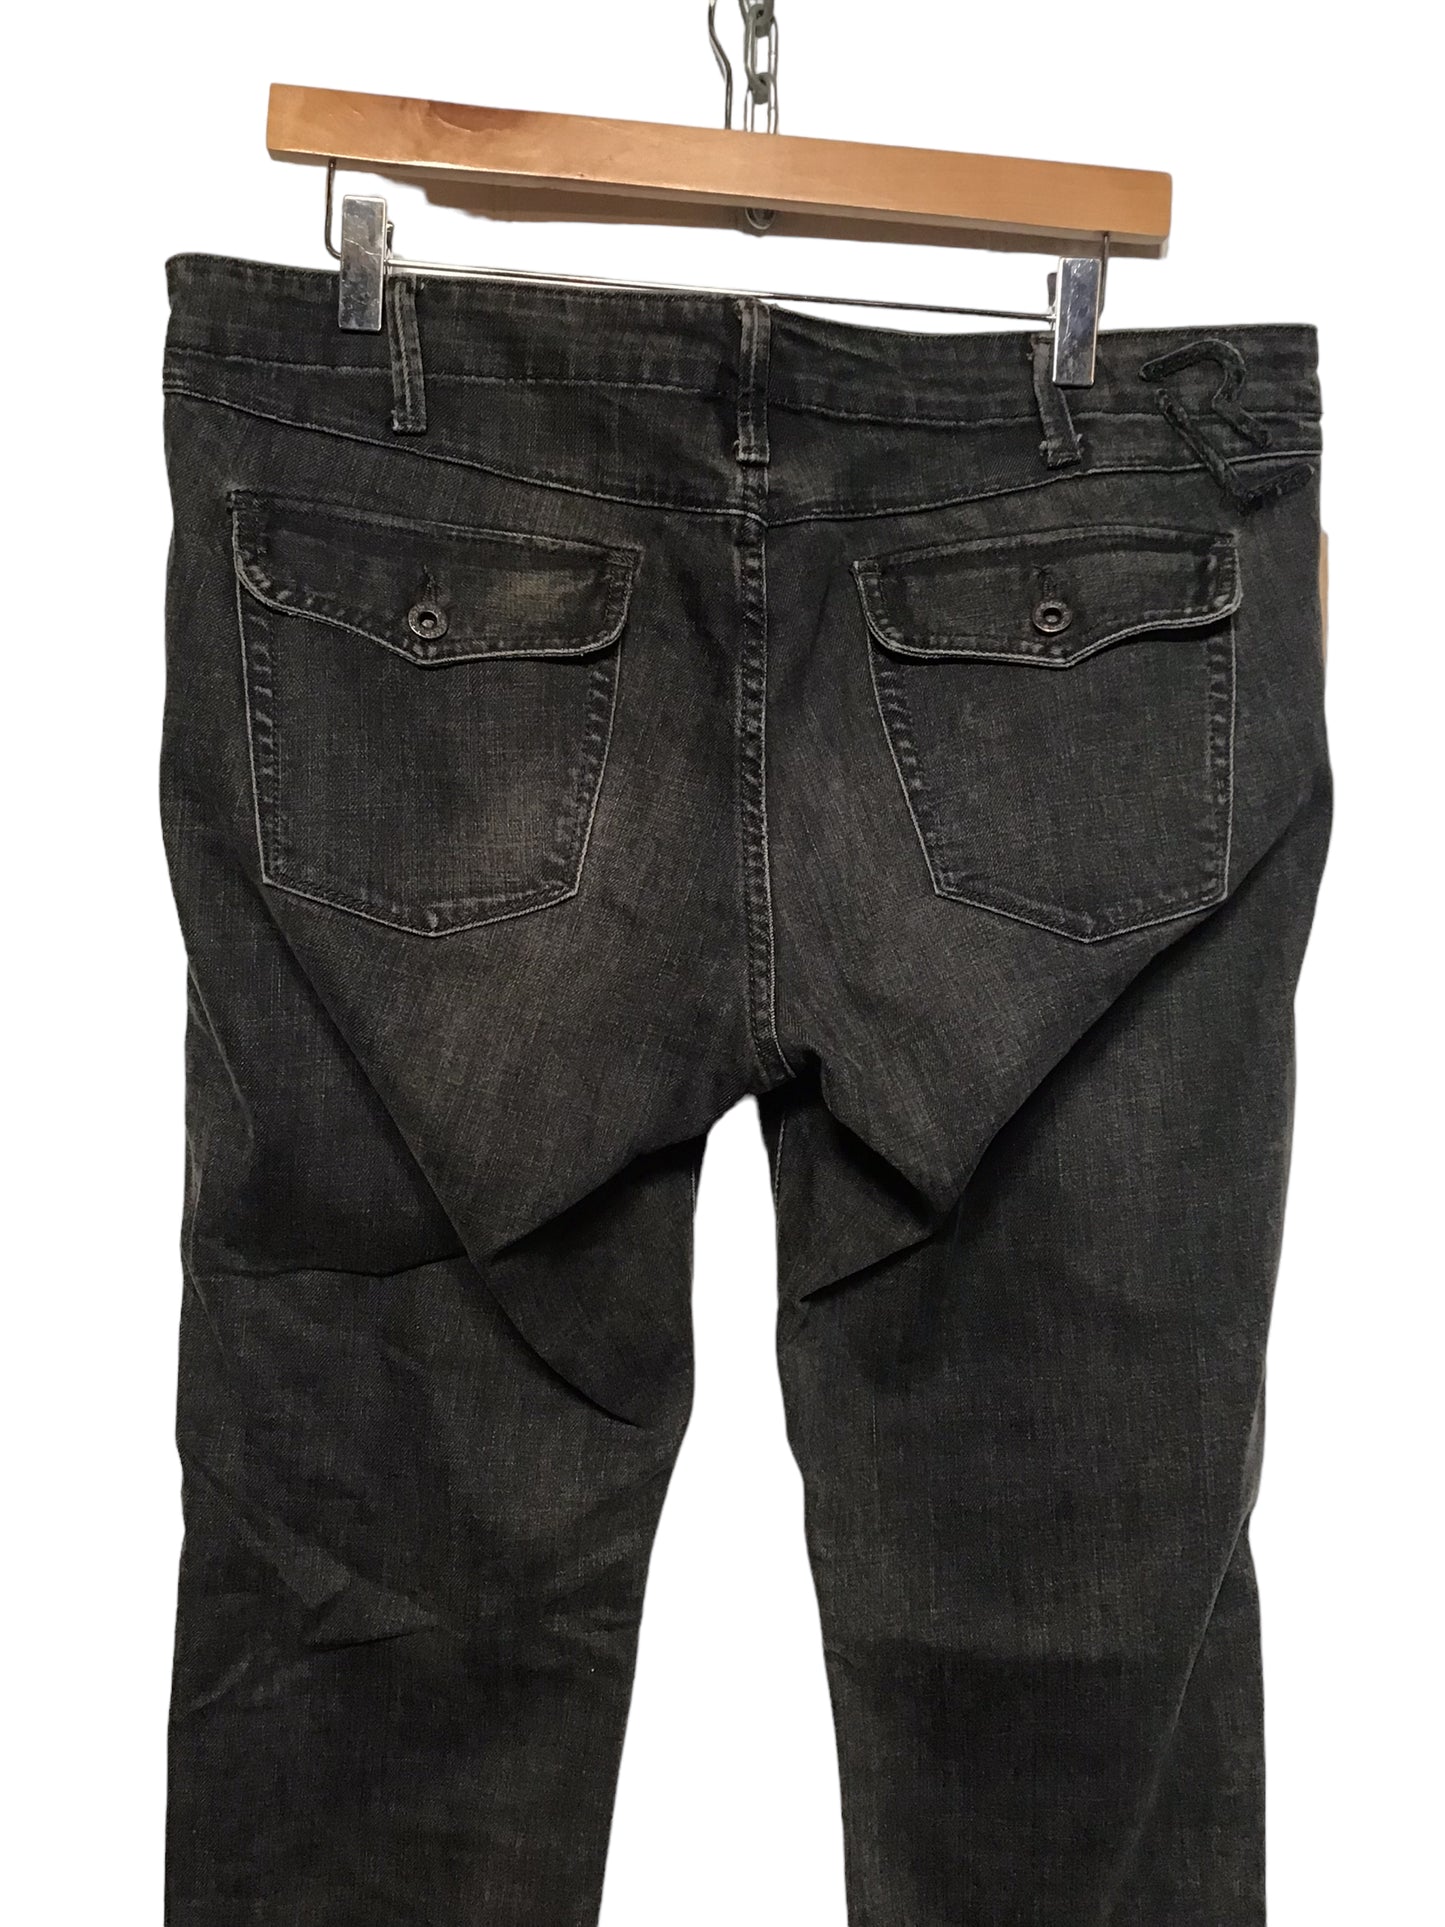 Black Denim Jeans (36x34)